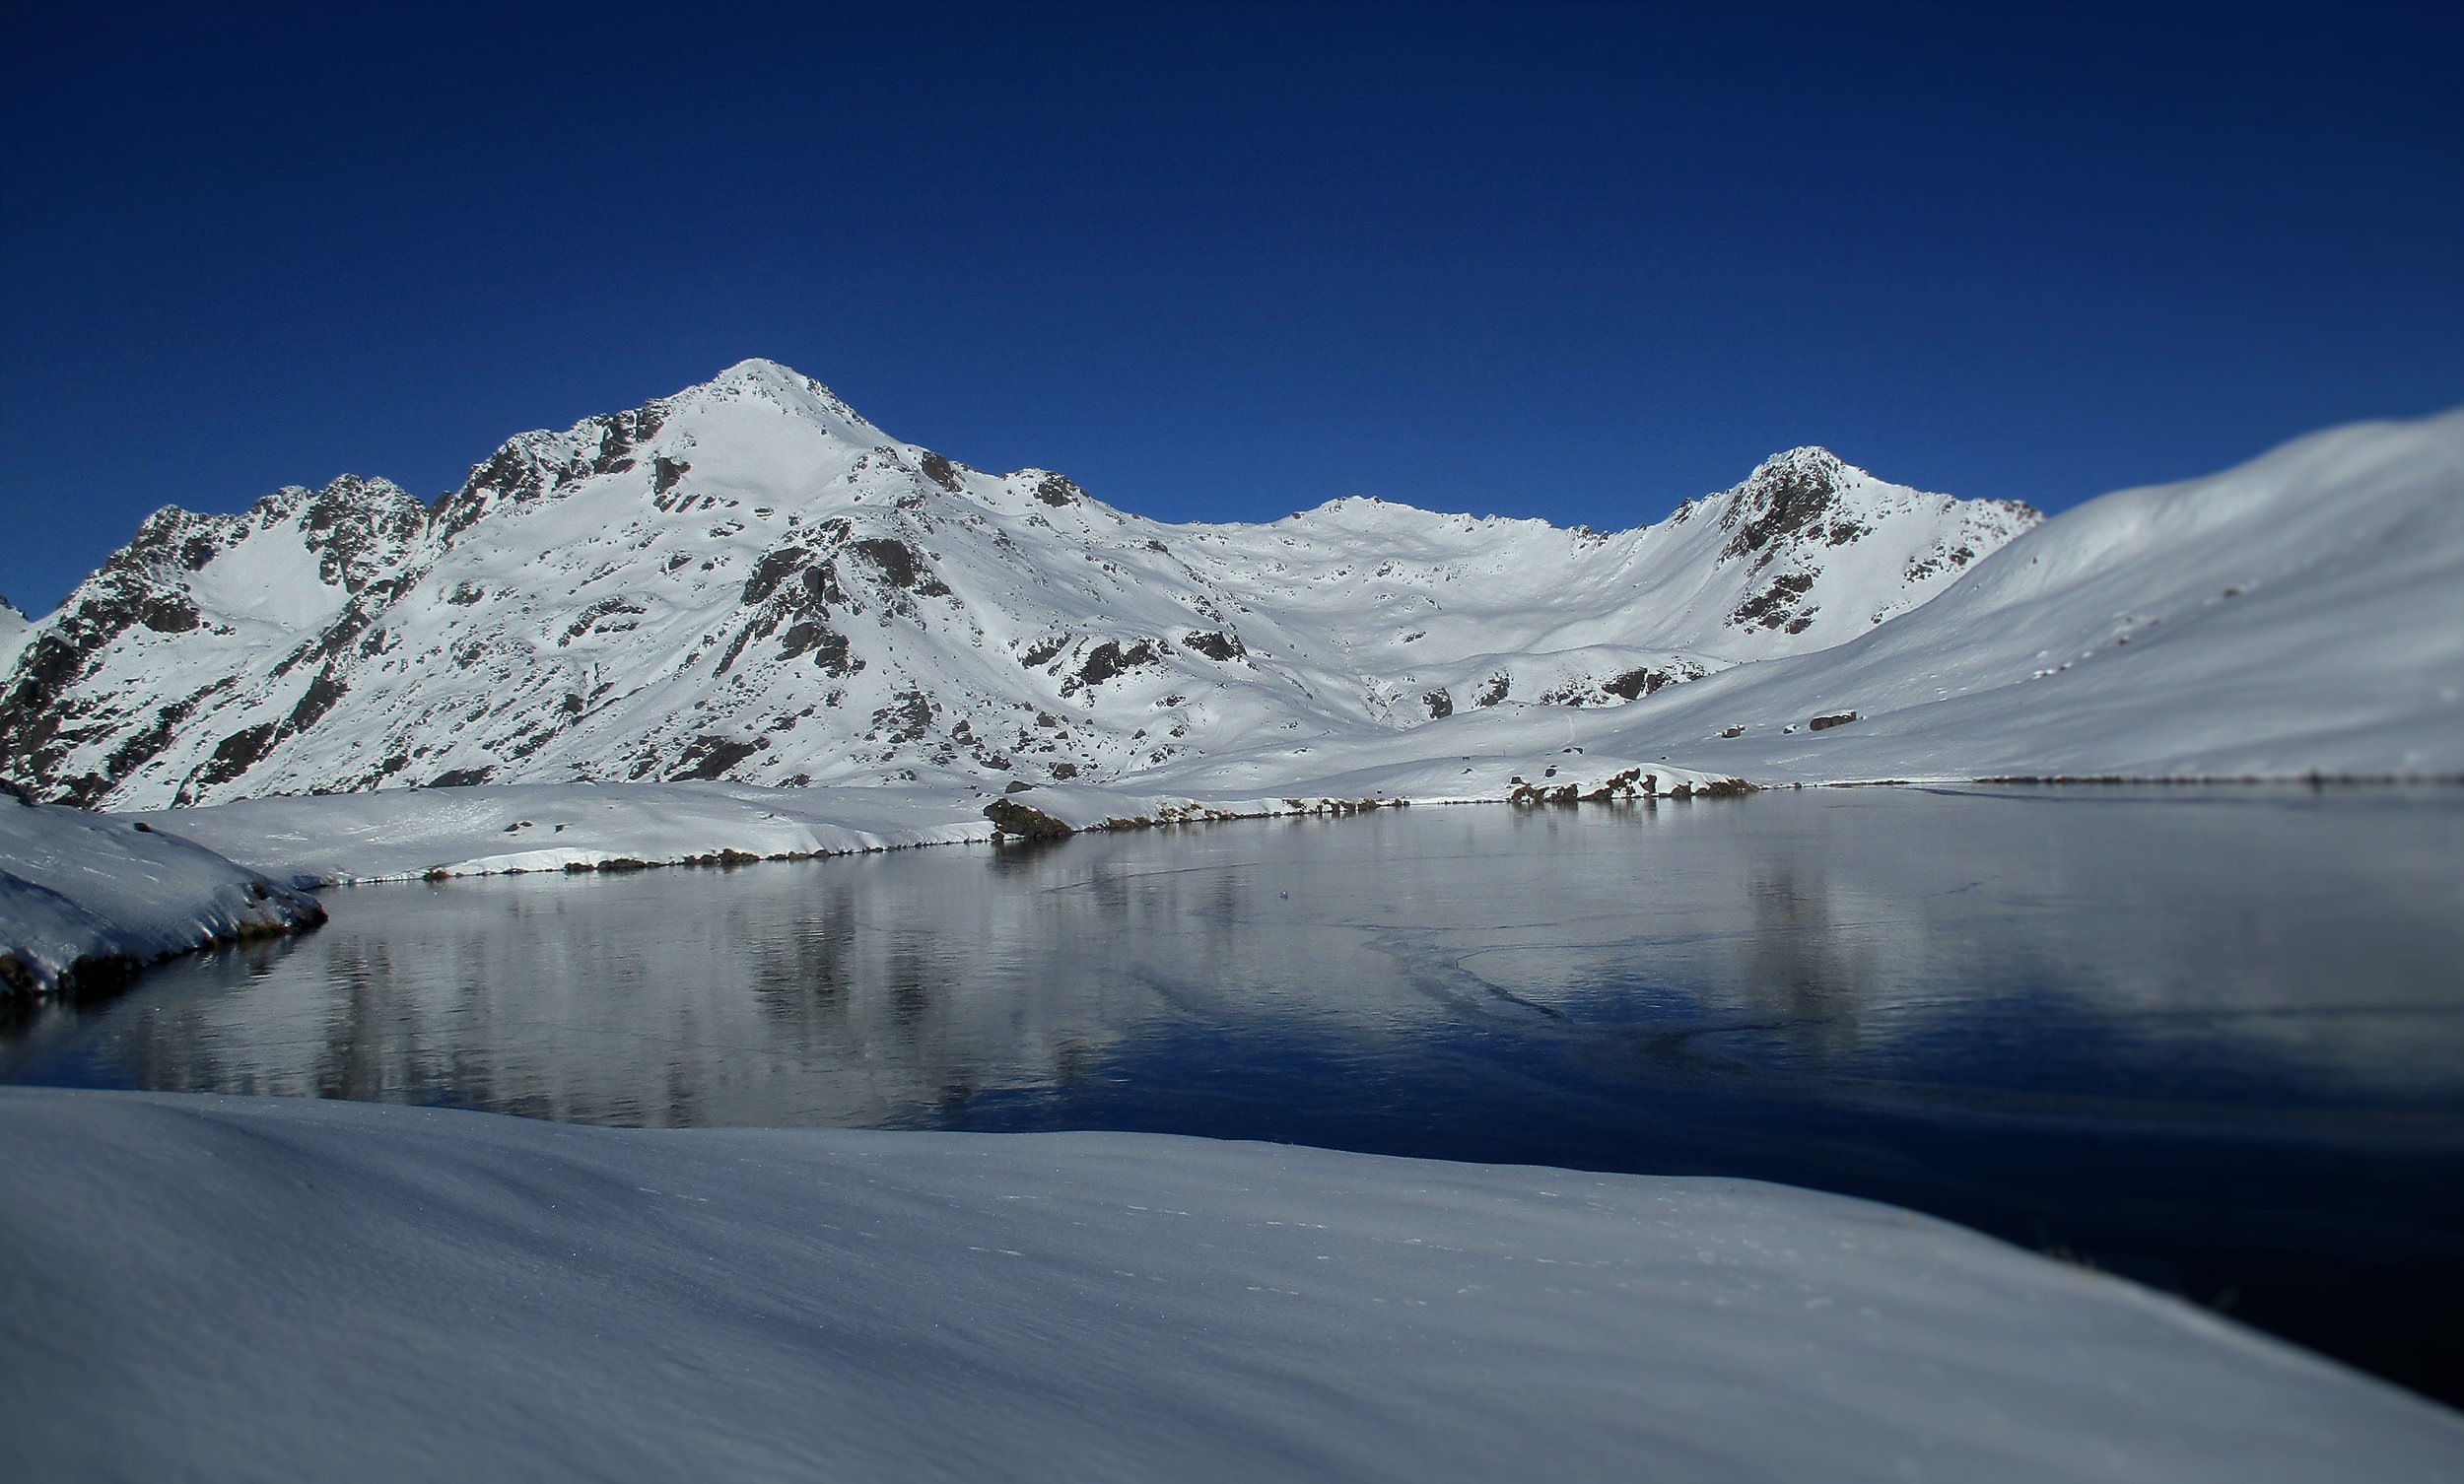   Mount Angelus in early winter.  